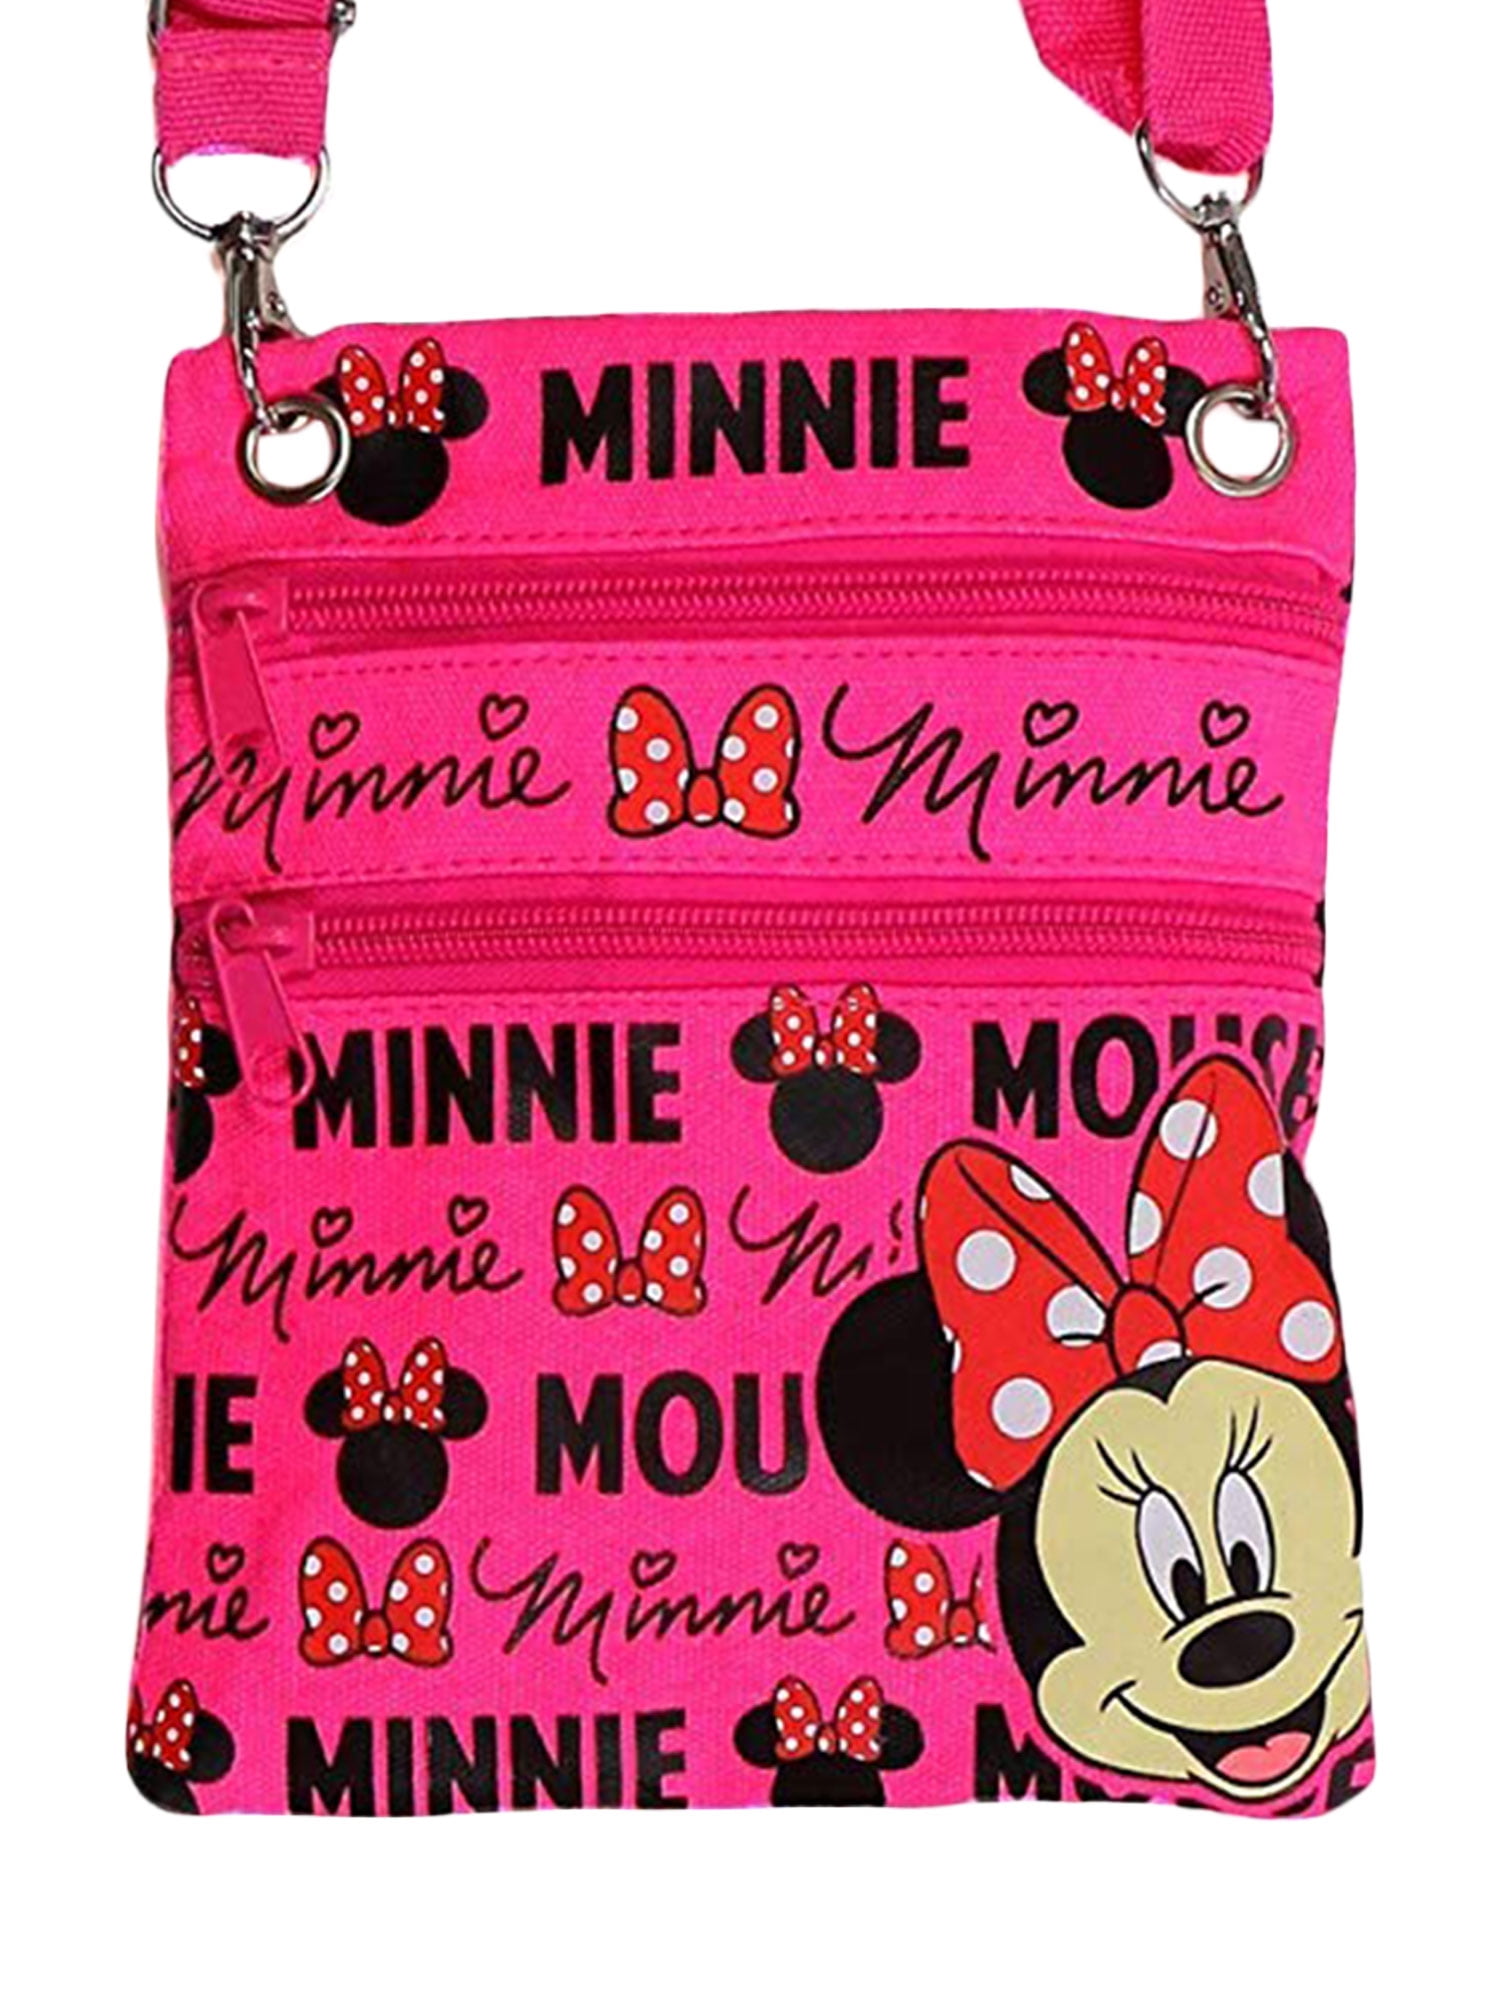 Kate Spade x Disney Minnie Mouse Vanity Case Crossbody K9530 Black Leather:  Handbags: Amazon.com